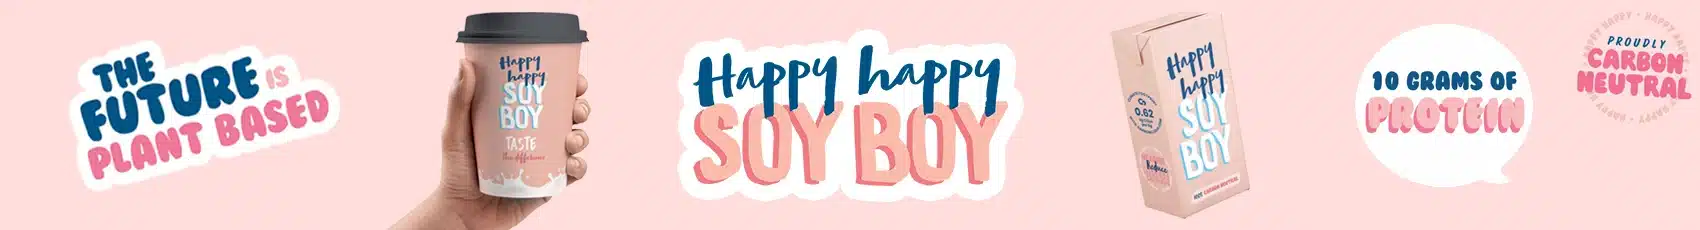 Buy Happy Happy Soy Boy here, Click here